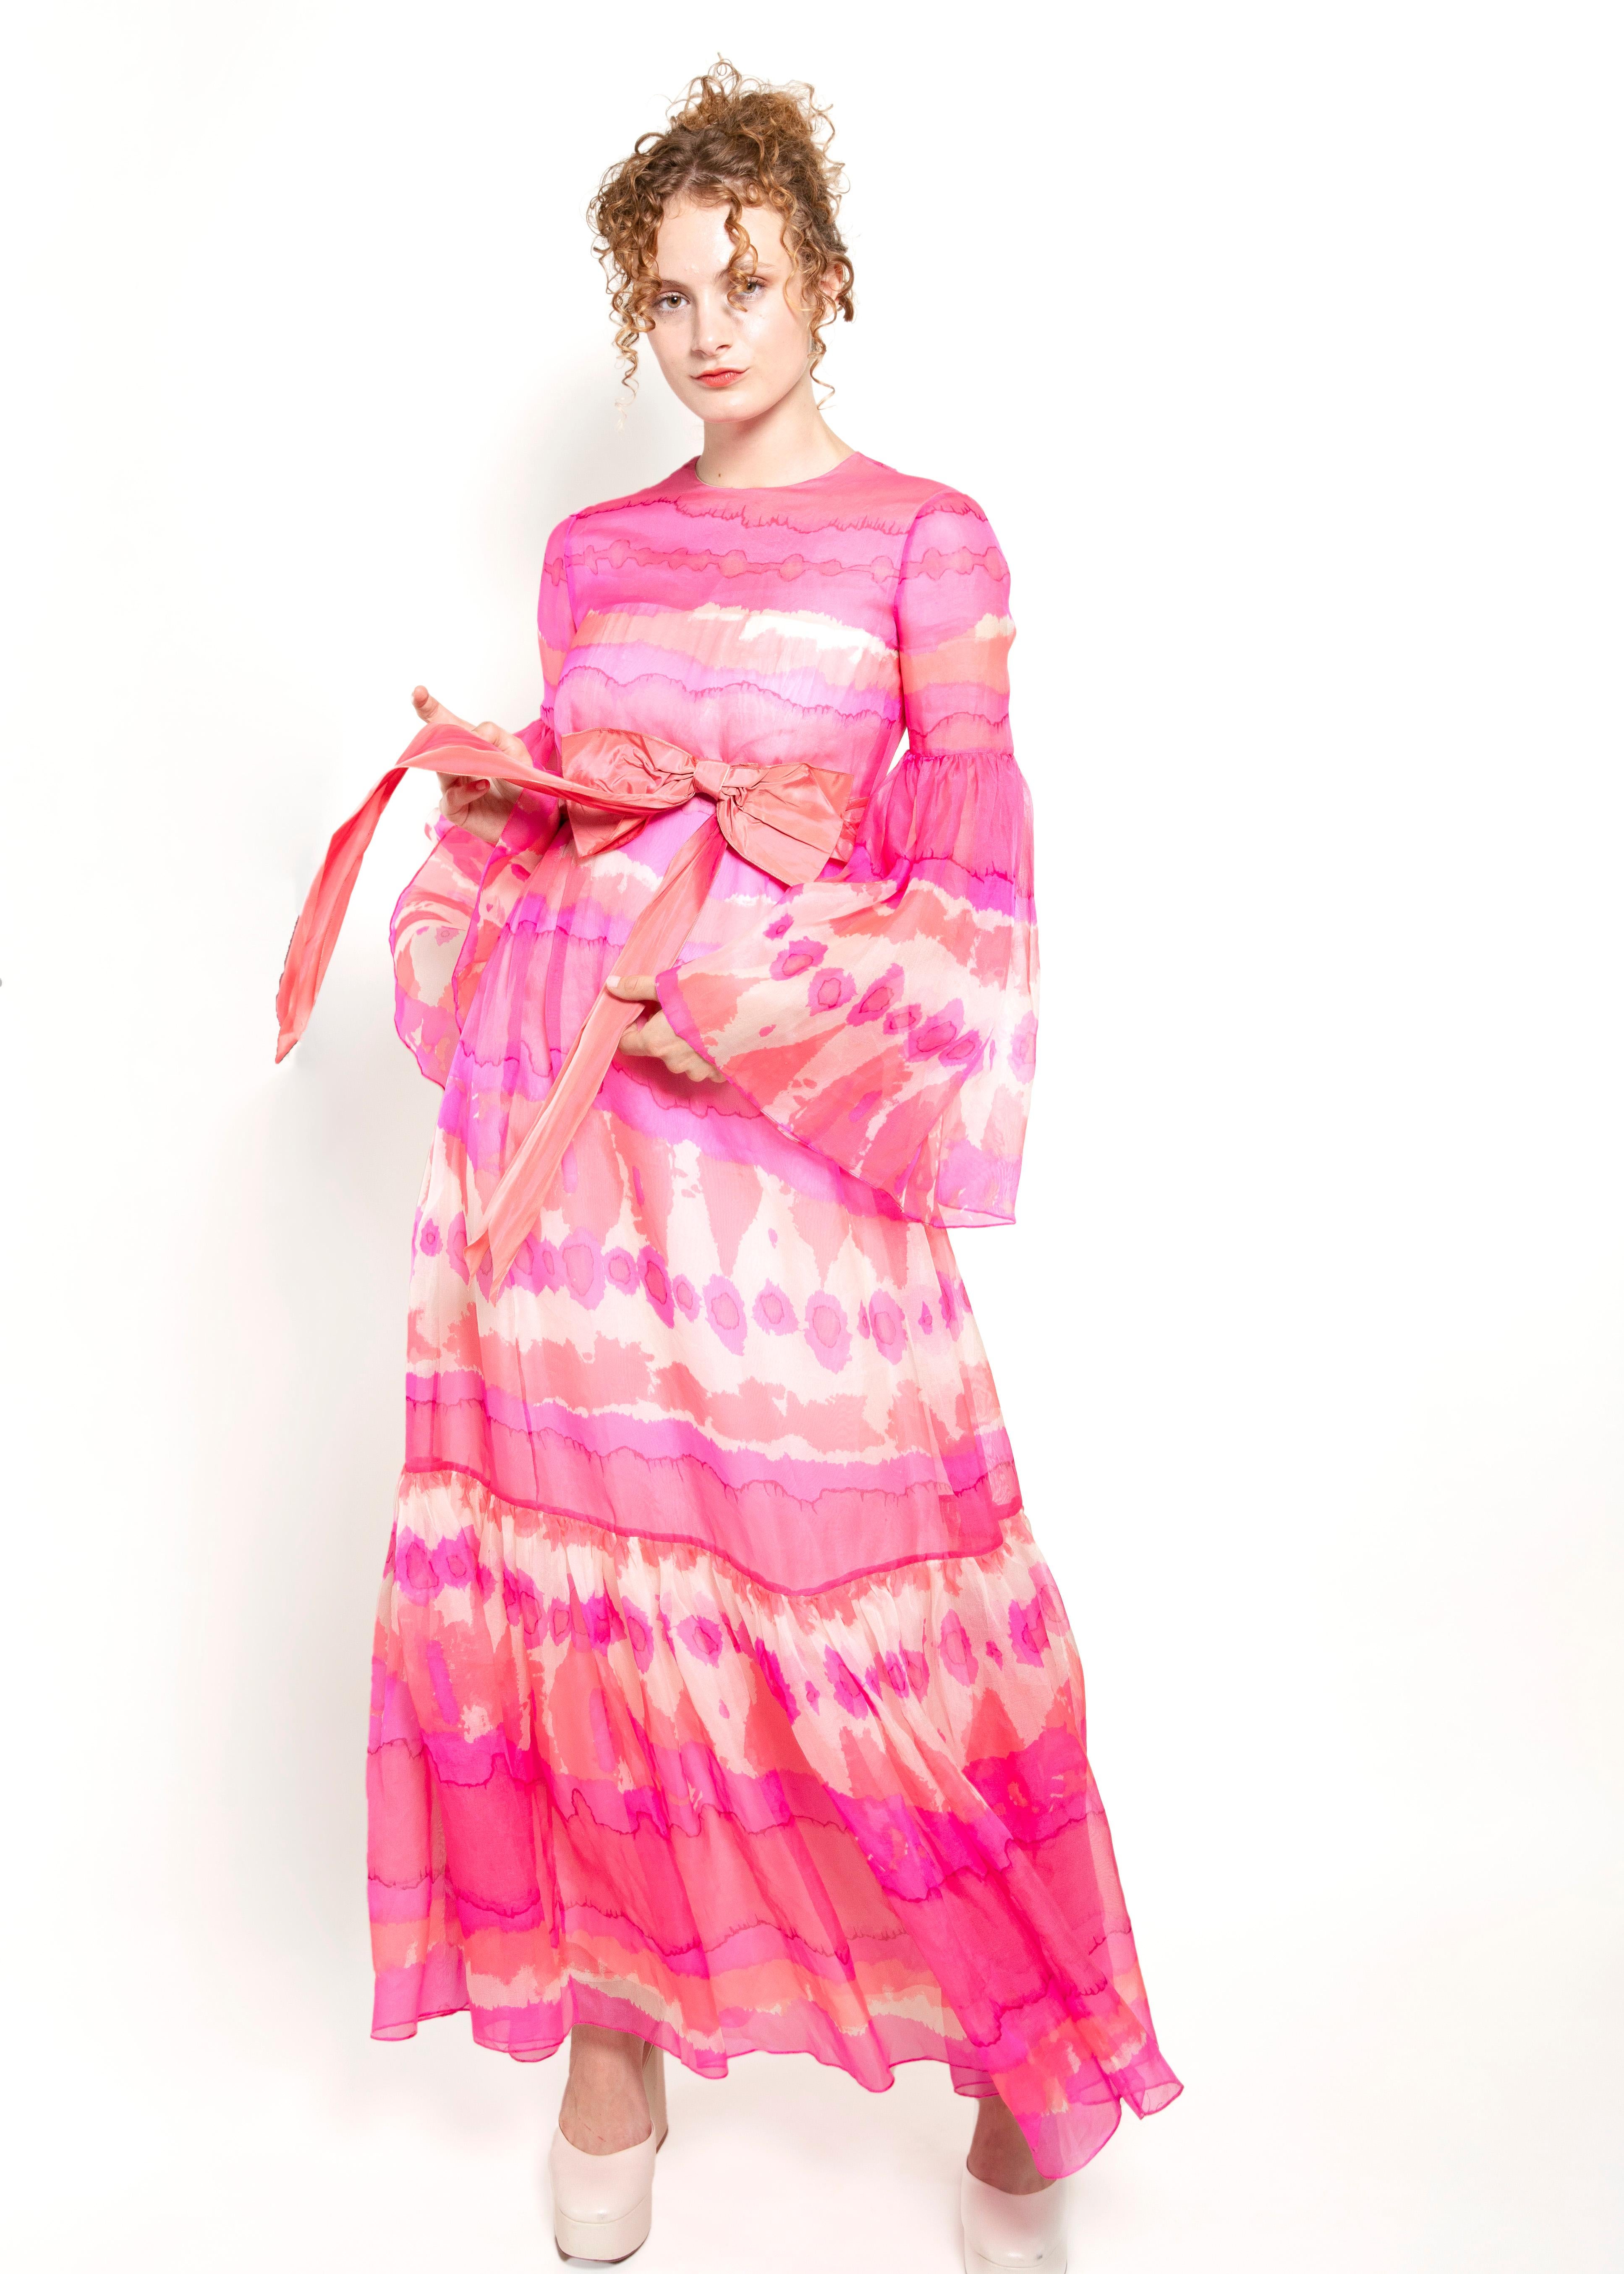 Vintage Malcom Starr Pink Chiffon Bell Sleeve Dress For Sale 5